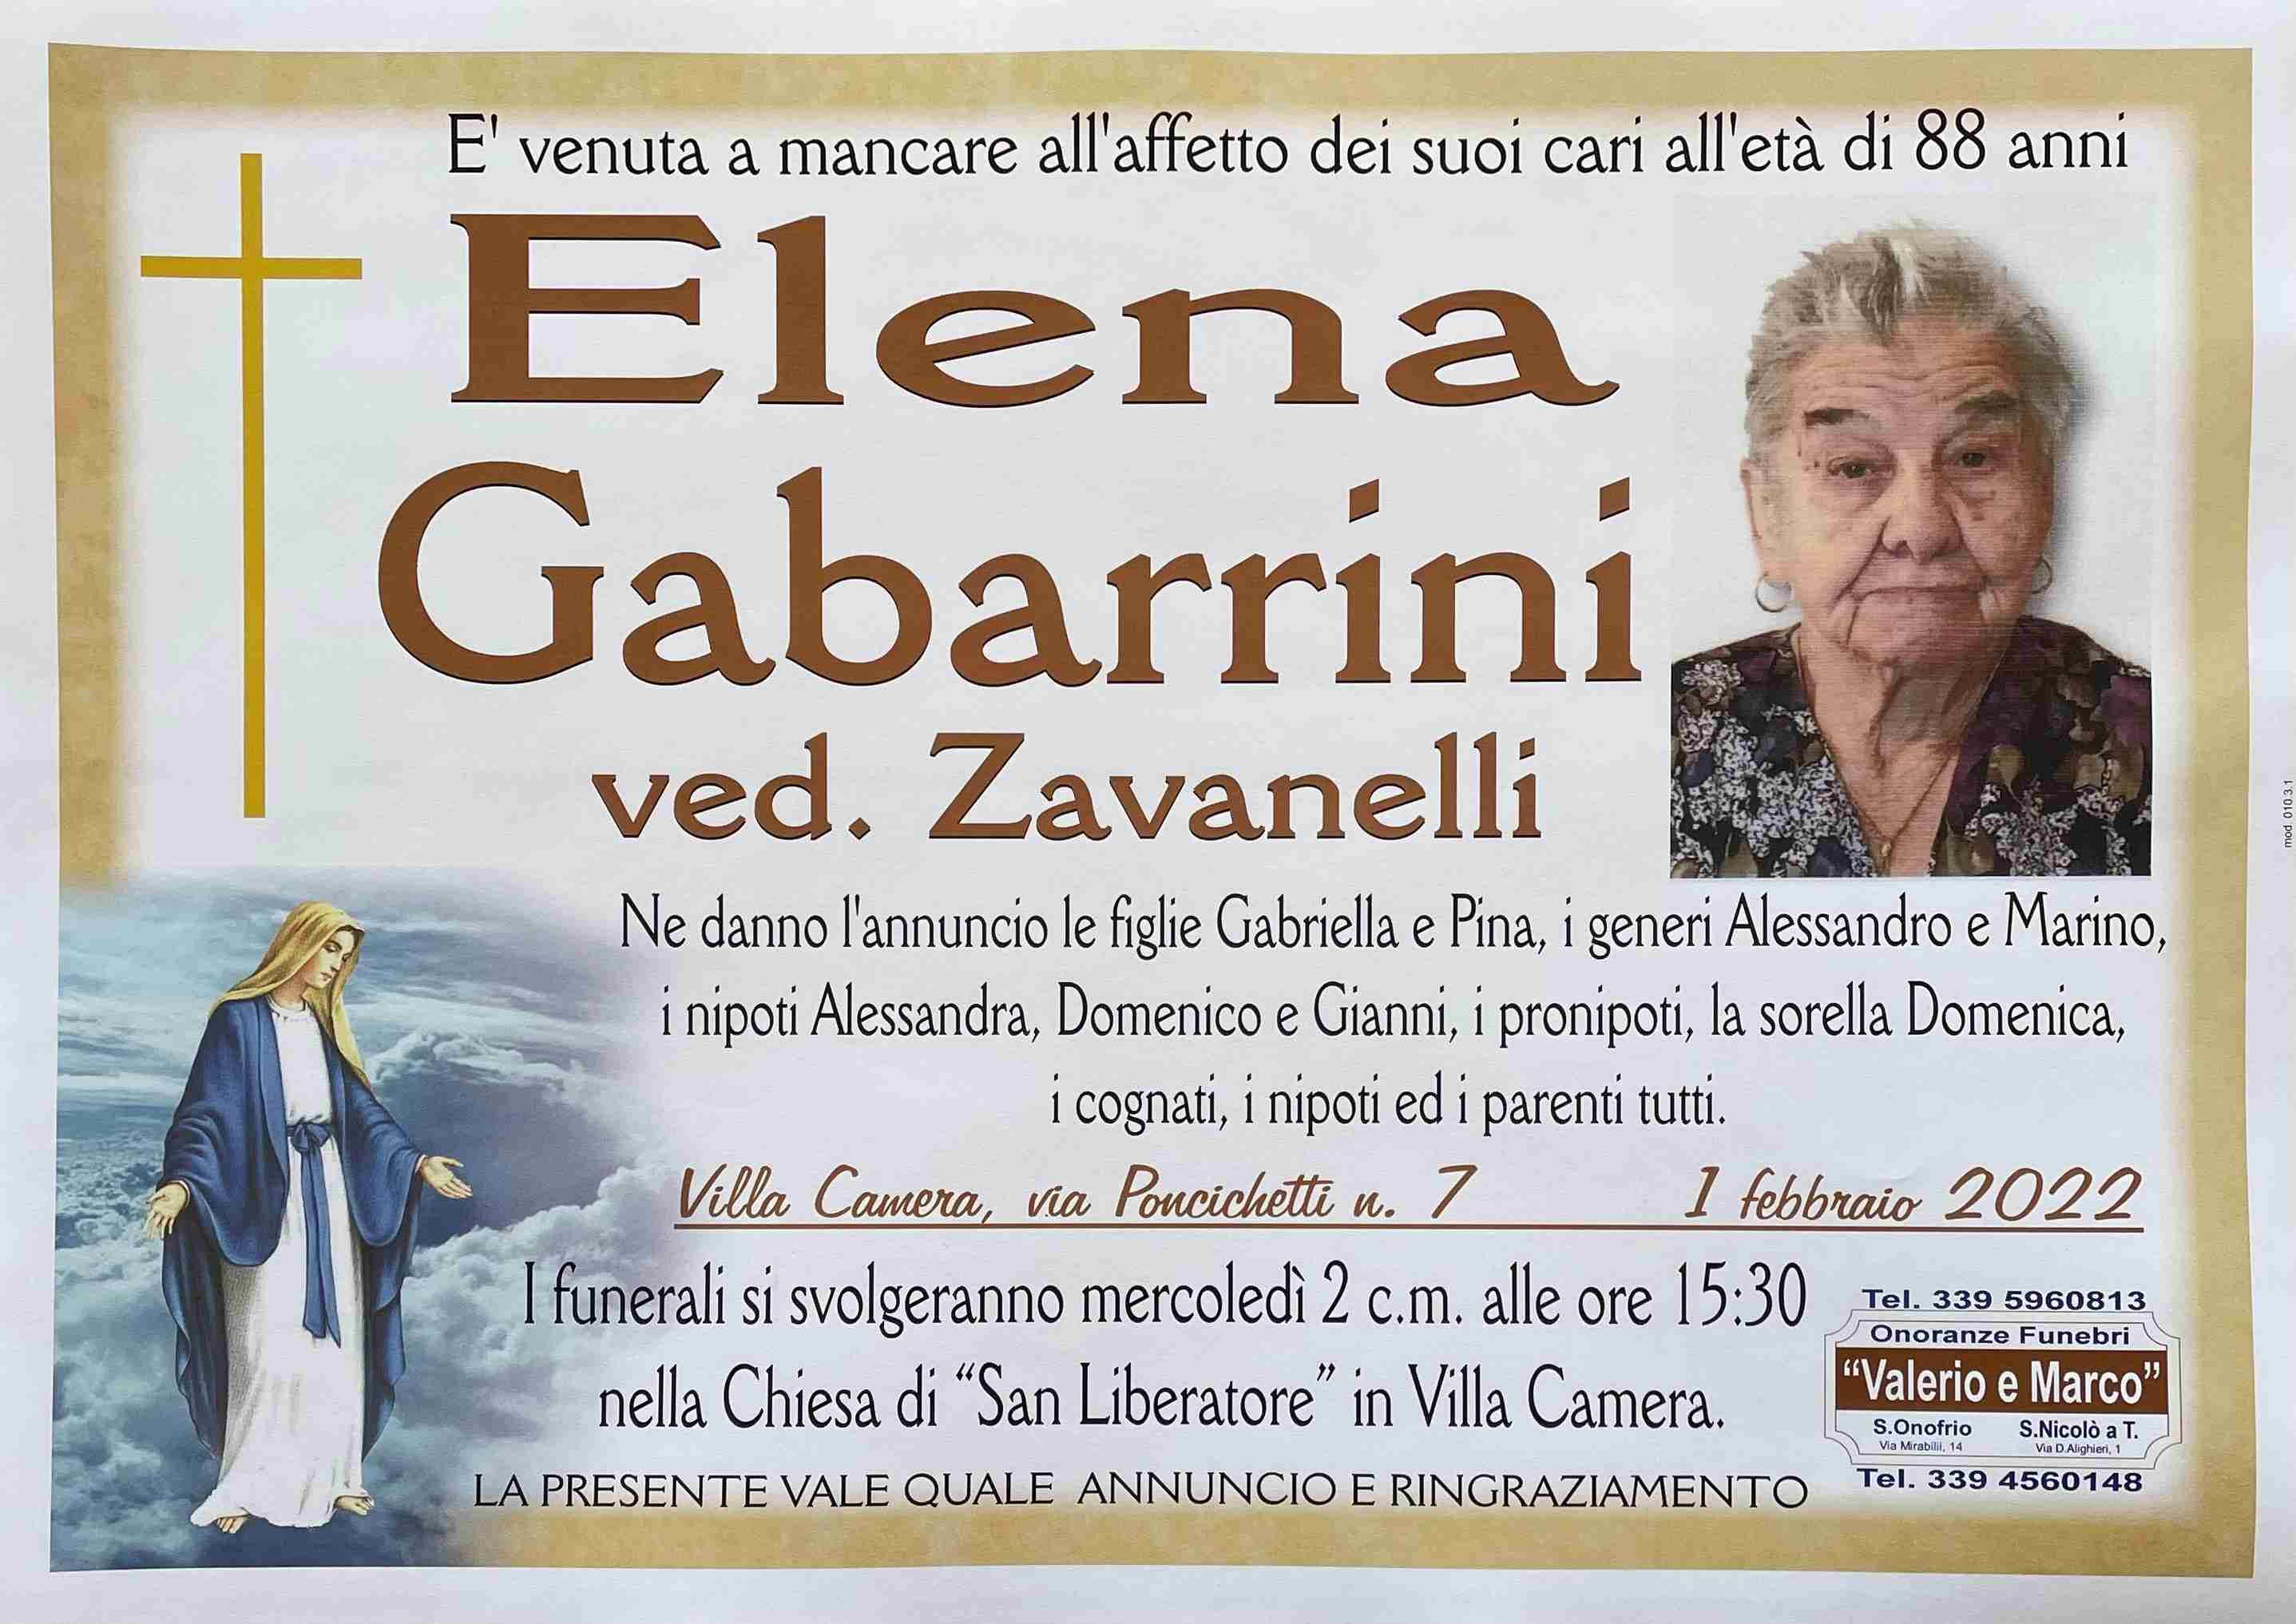 Elena Gabarrini